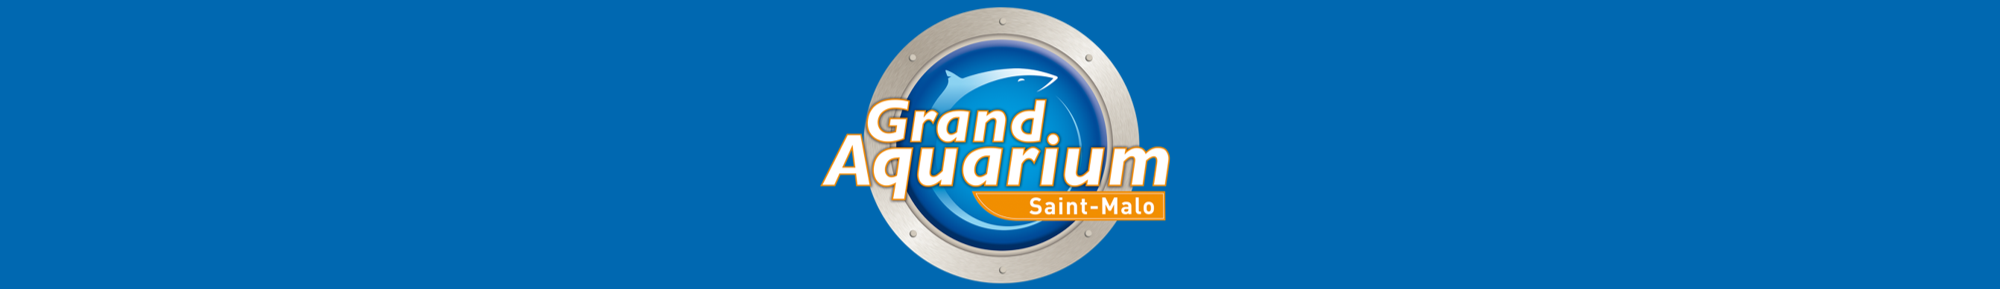 GRAND AQUARIUM DE SAINT-MALO logo